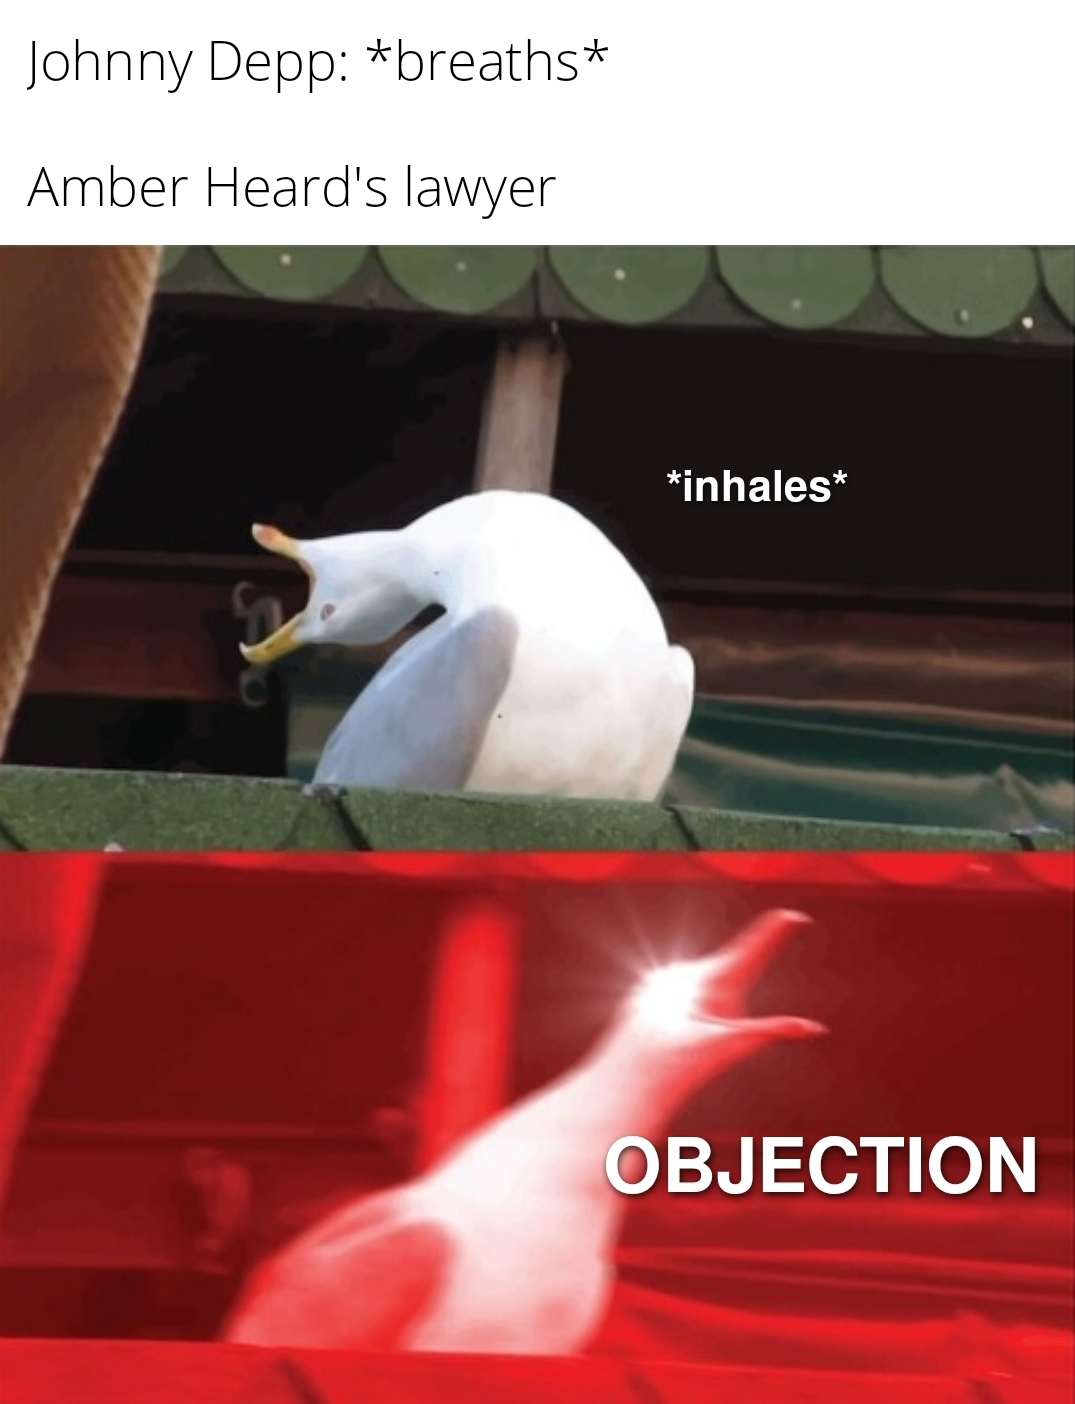 funny memes - dank memes - möwe meme - Johnny Depp breaths Amber Heard's lawyer inhales Objection